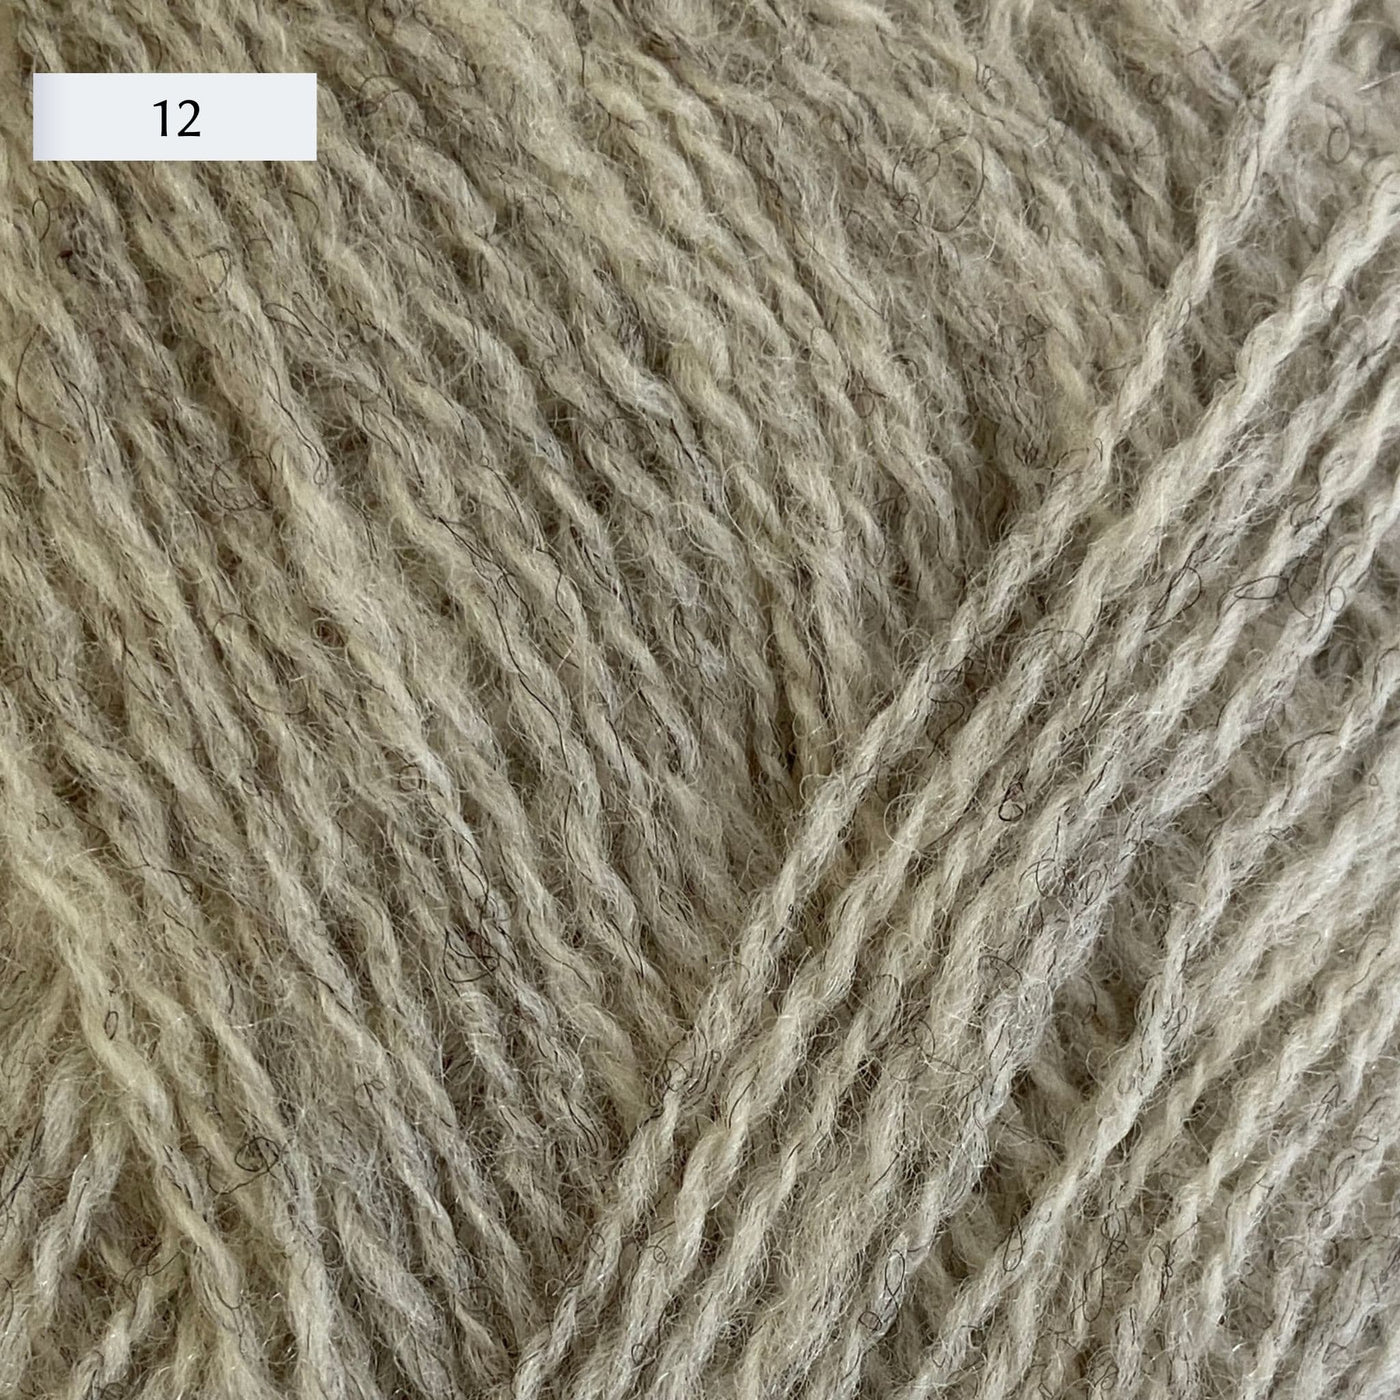 Rauma Lamullgarn, a fingering weight yarn, in color 12, a very light heathered tan/grey